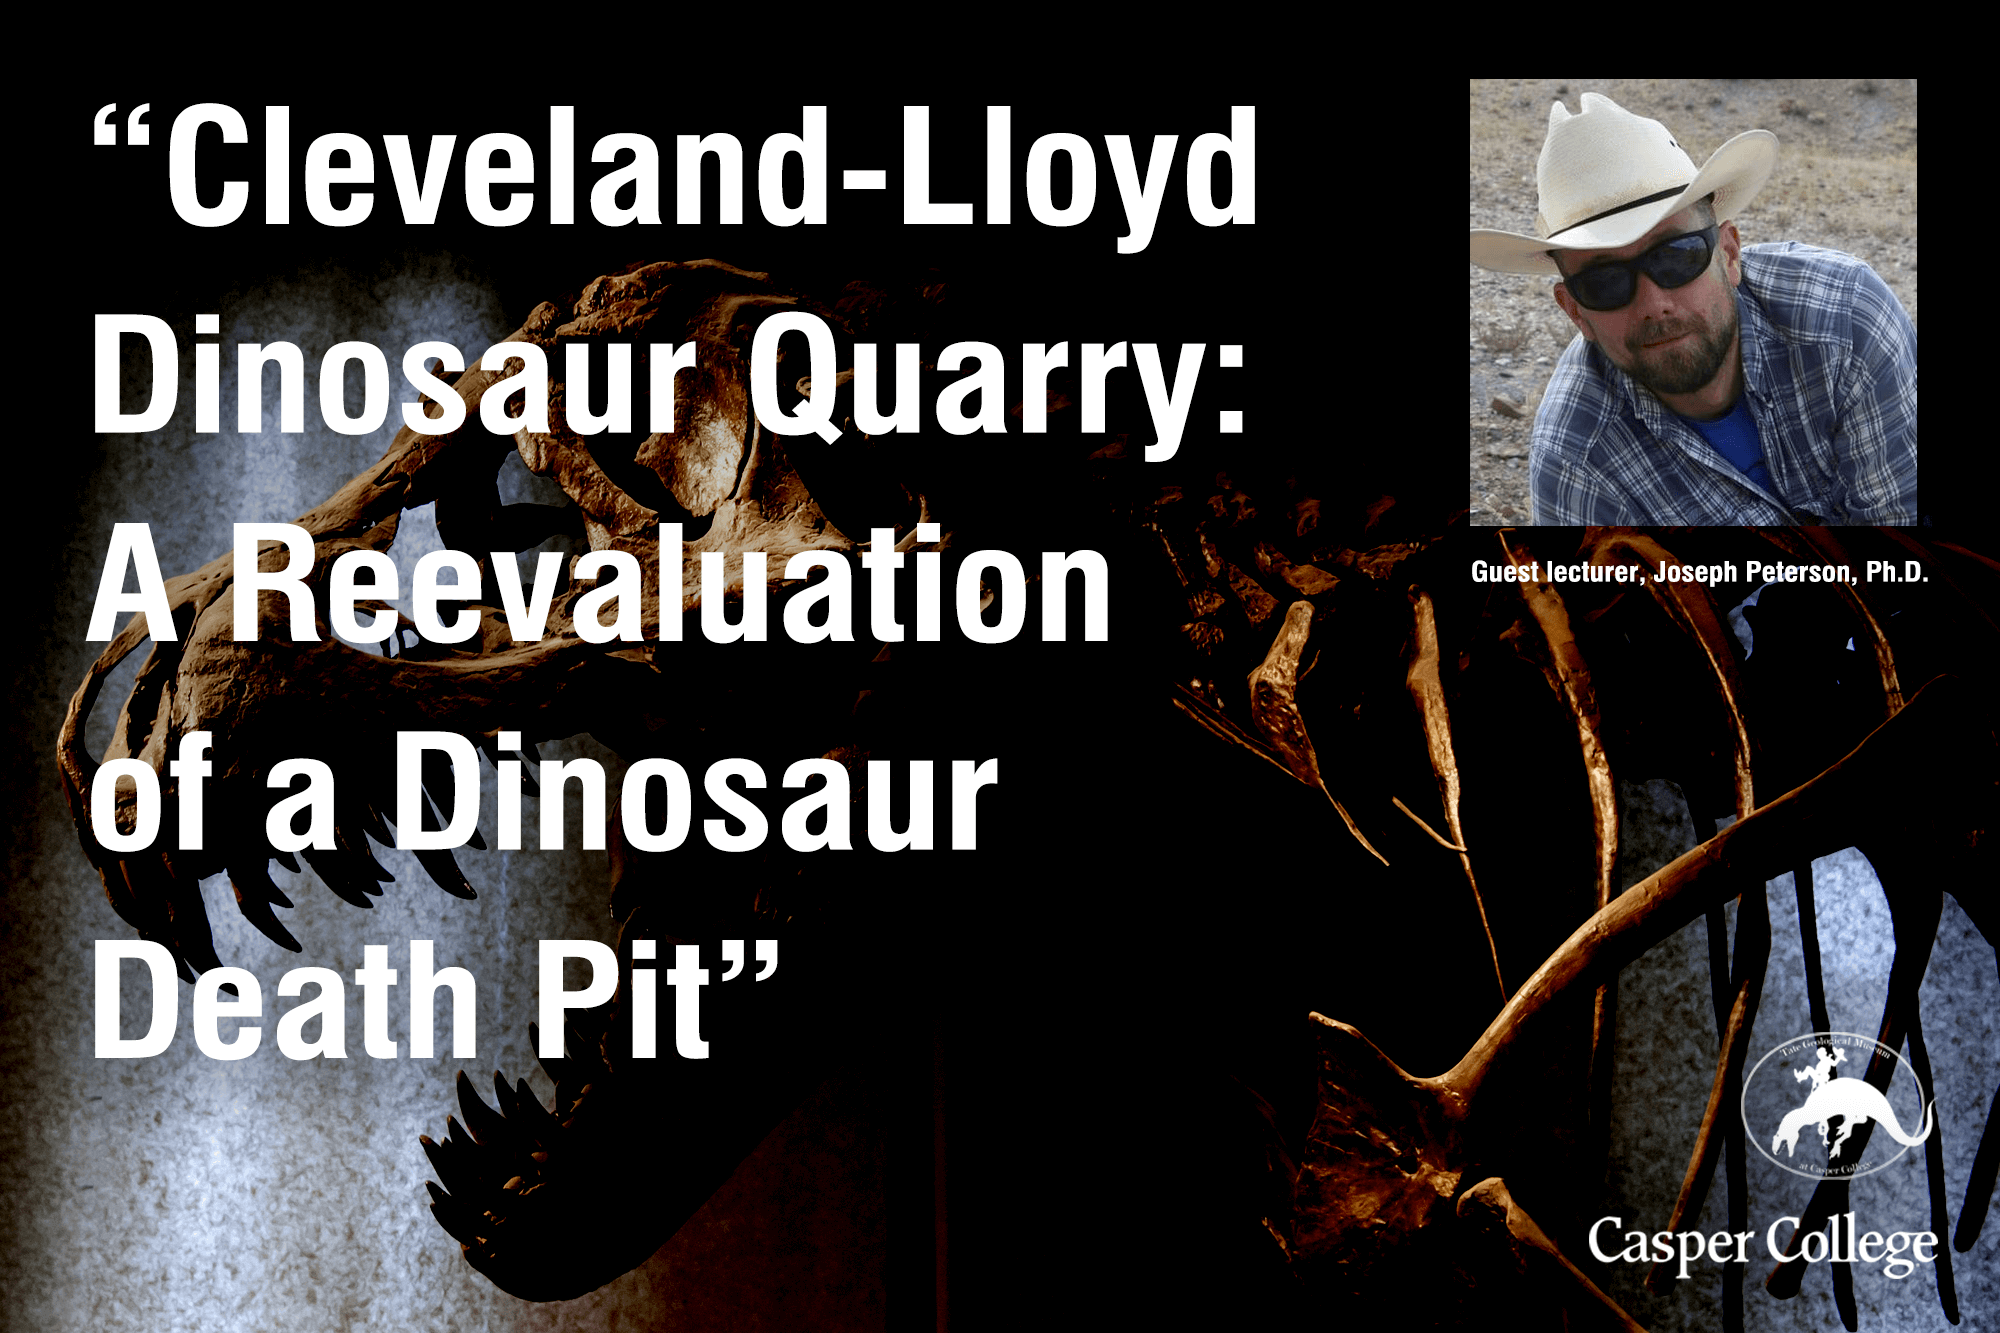 Image for "Dinosaur Death Pit" talk.